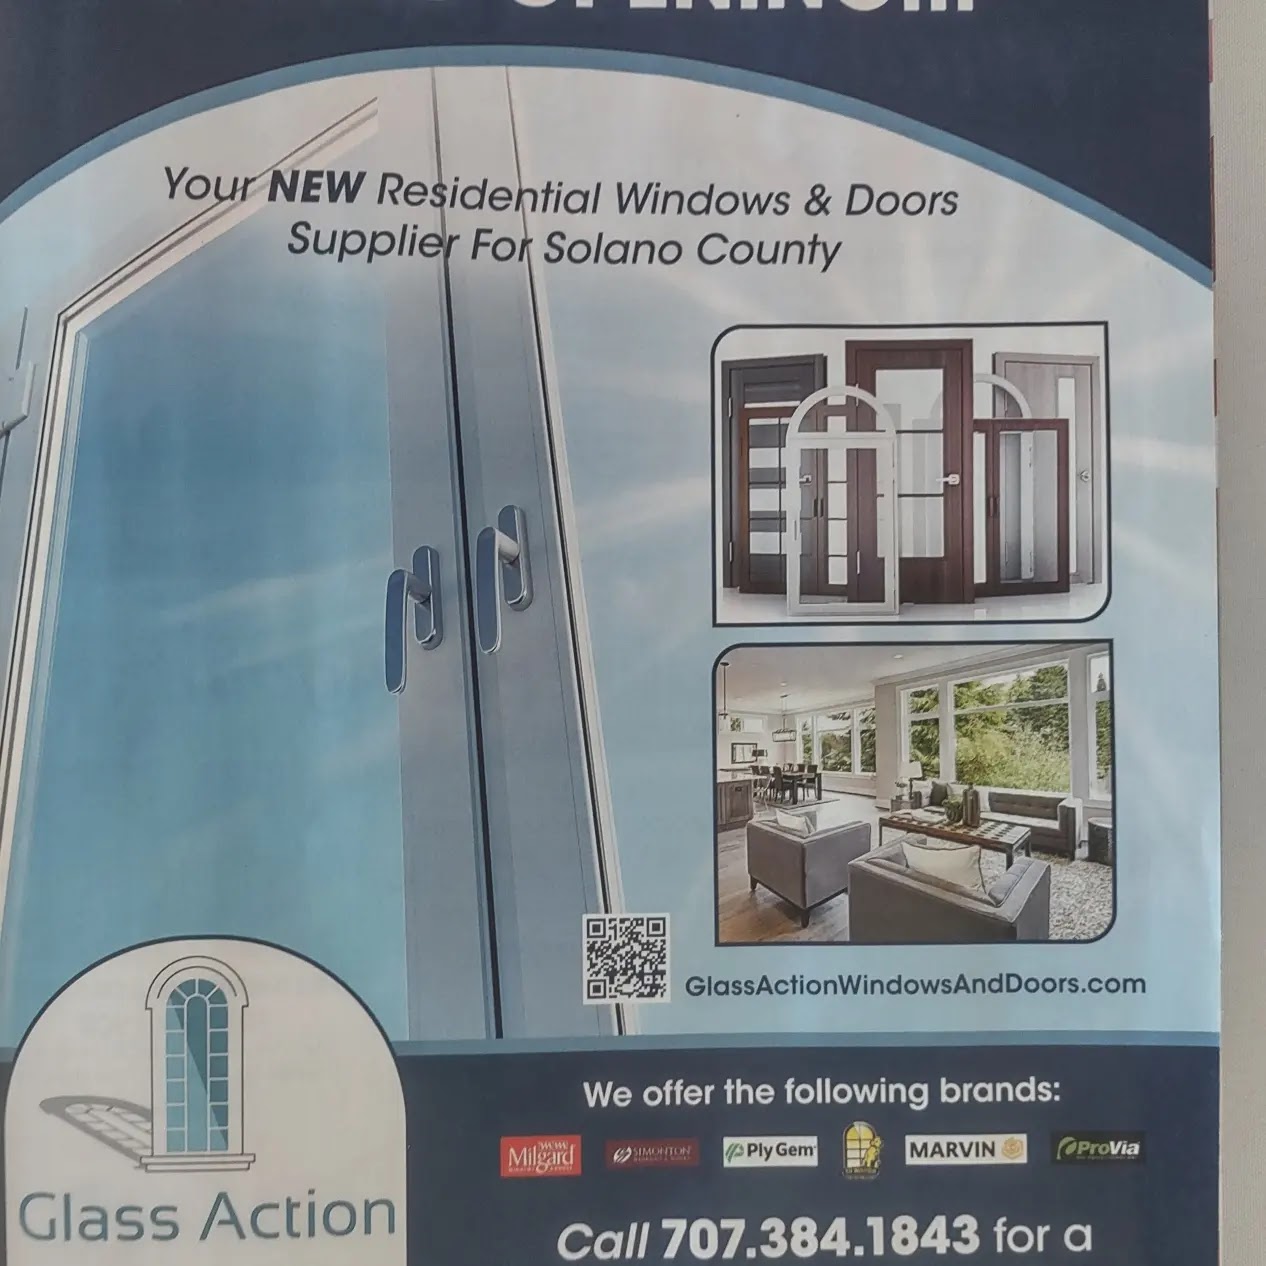 Glass Action Windows & Doors 50 Main St Suite B, Suisun City California 94585